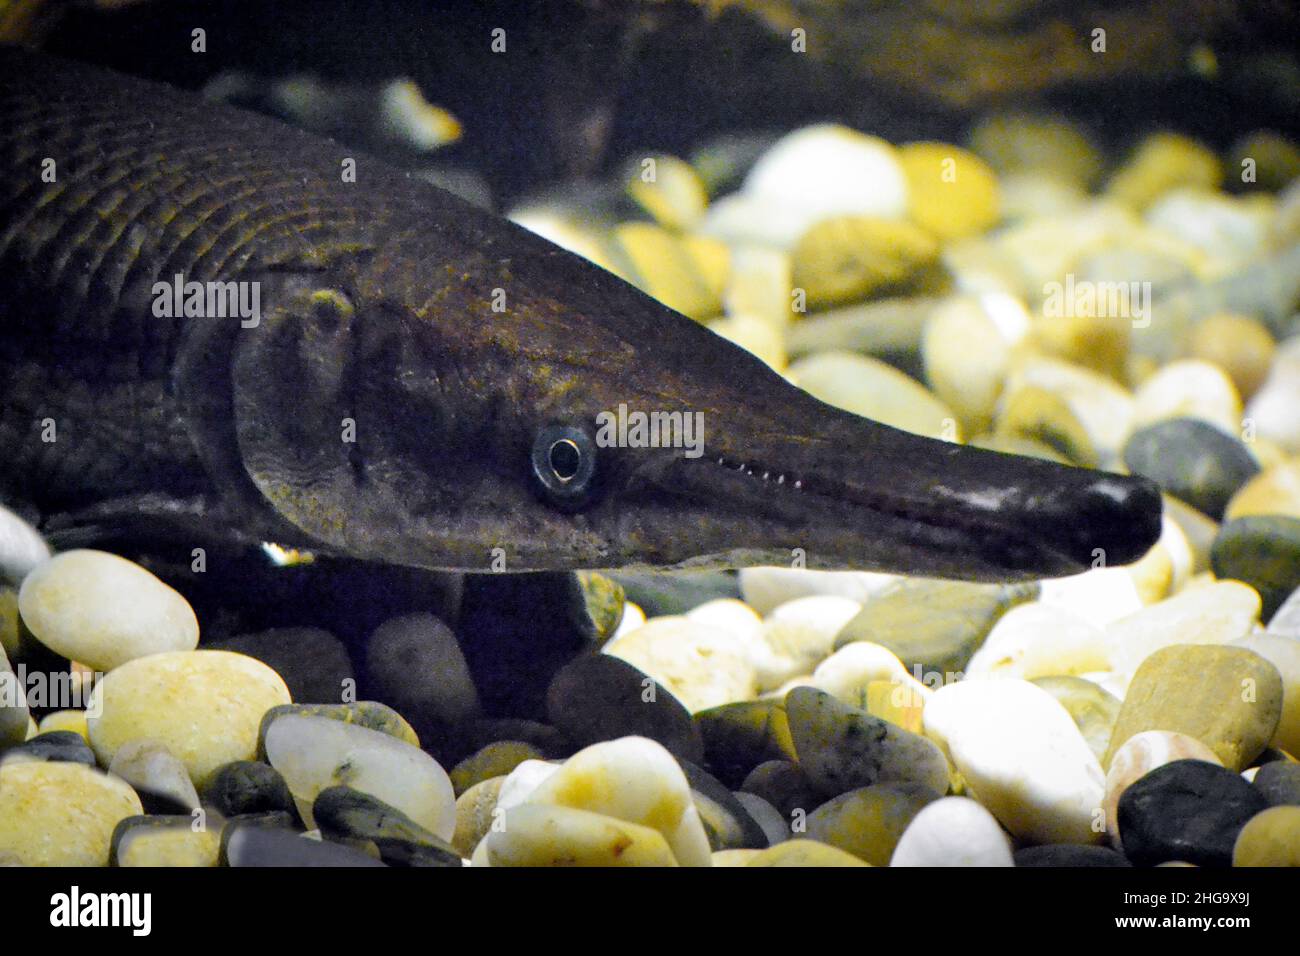 Channa argus fish - close-up on head Stock Photo